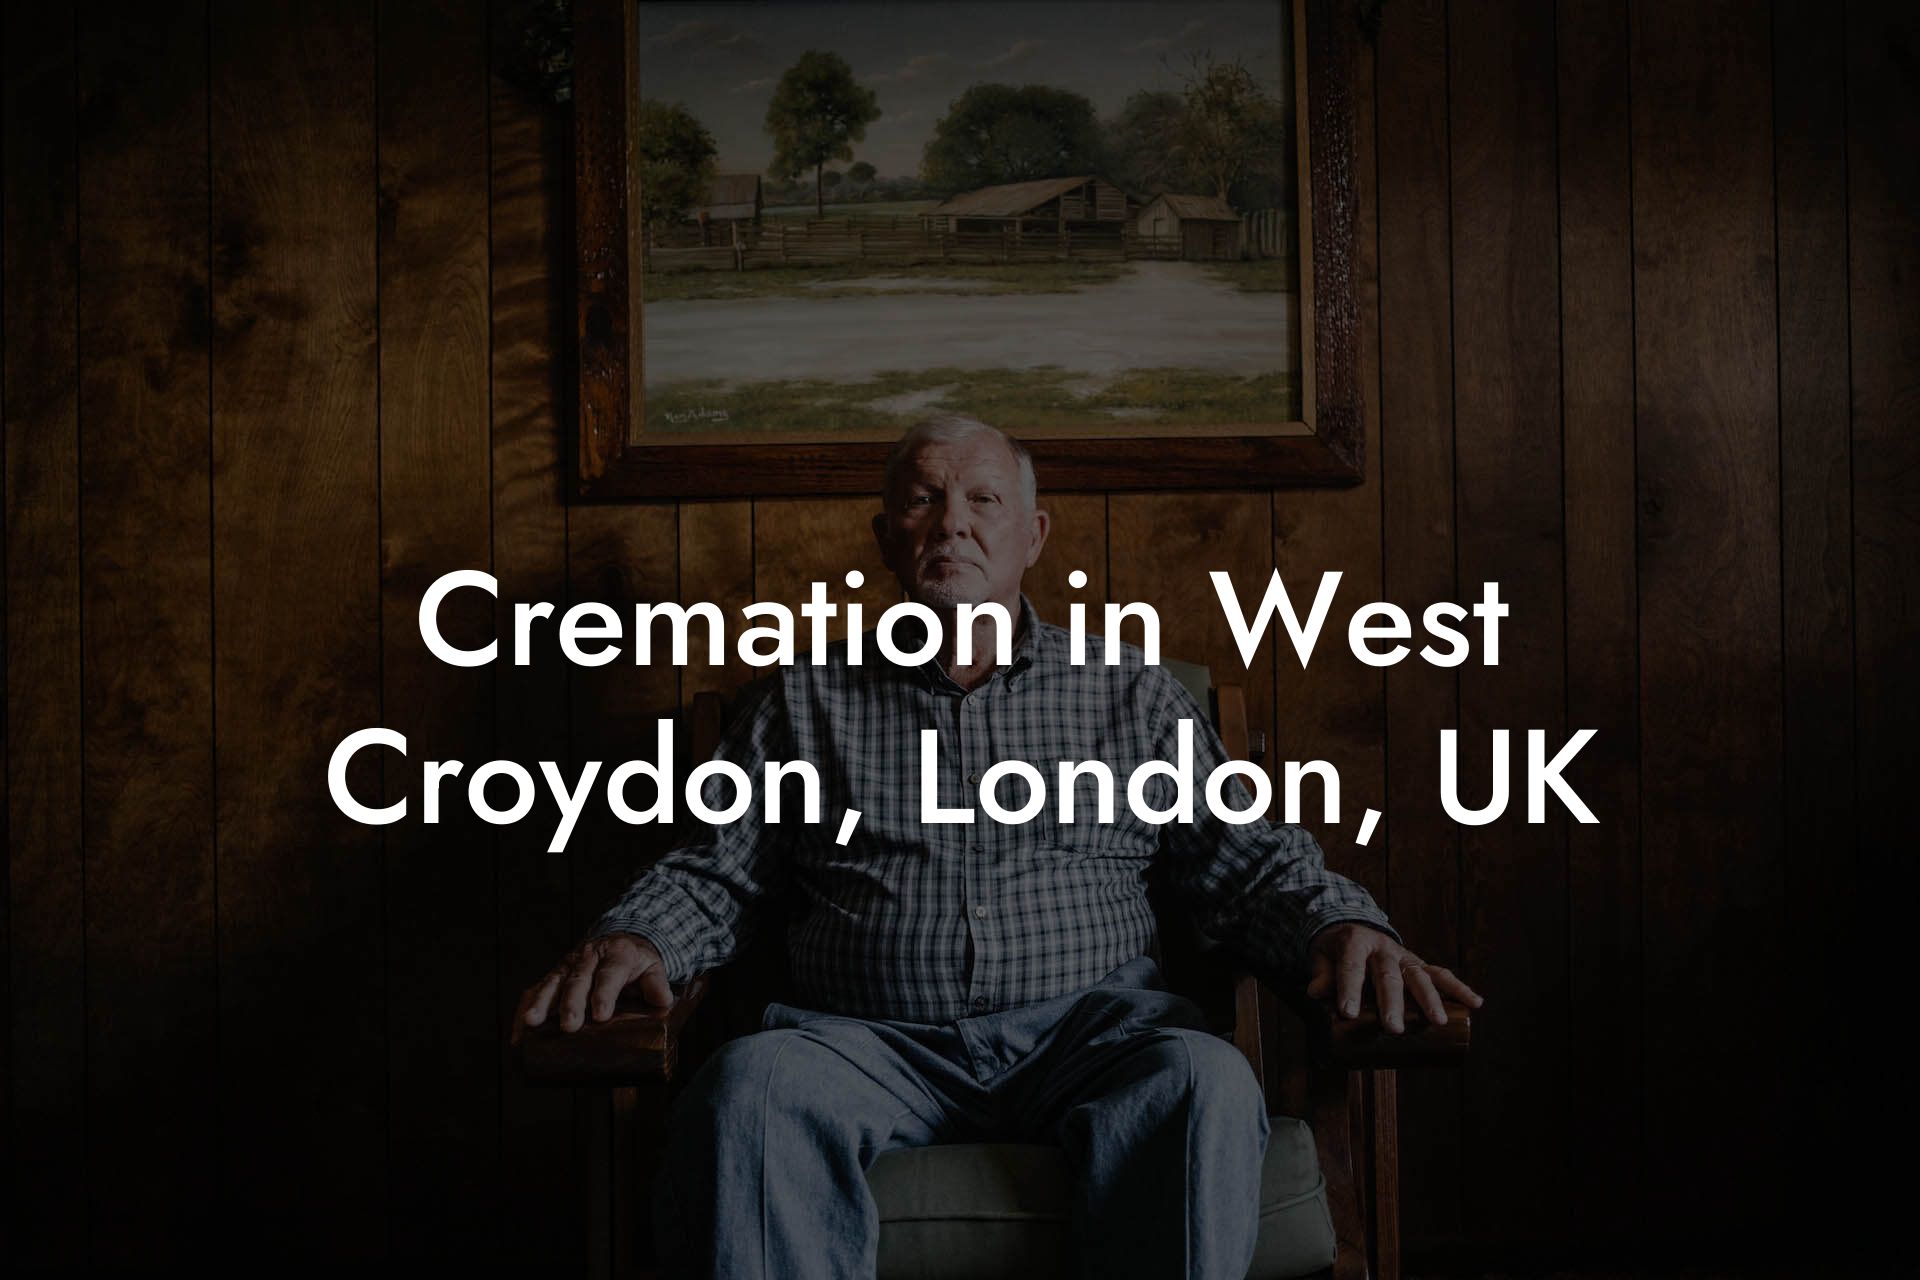 Cremation in West Croydon, London, UK